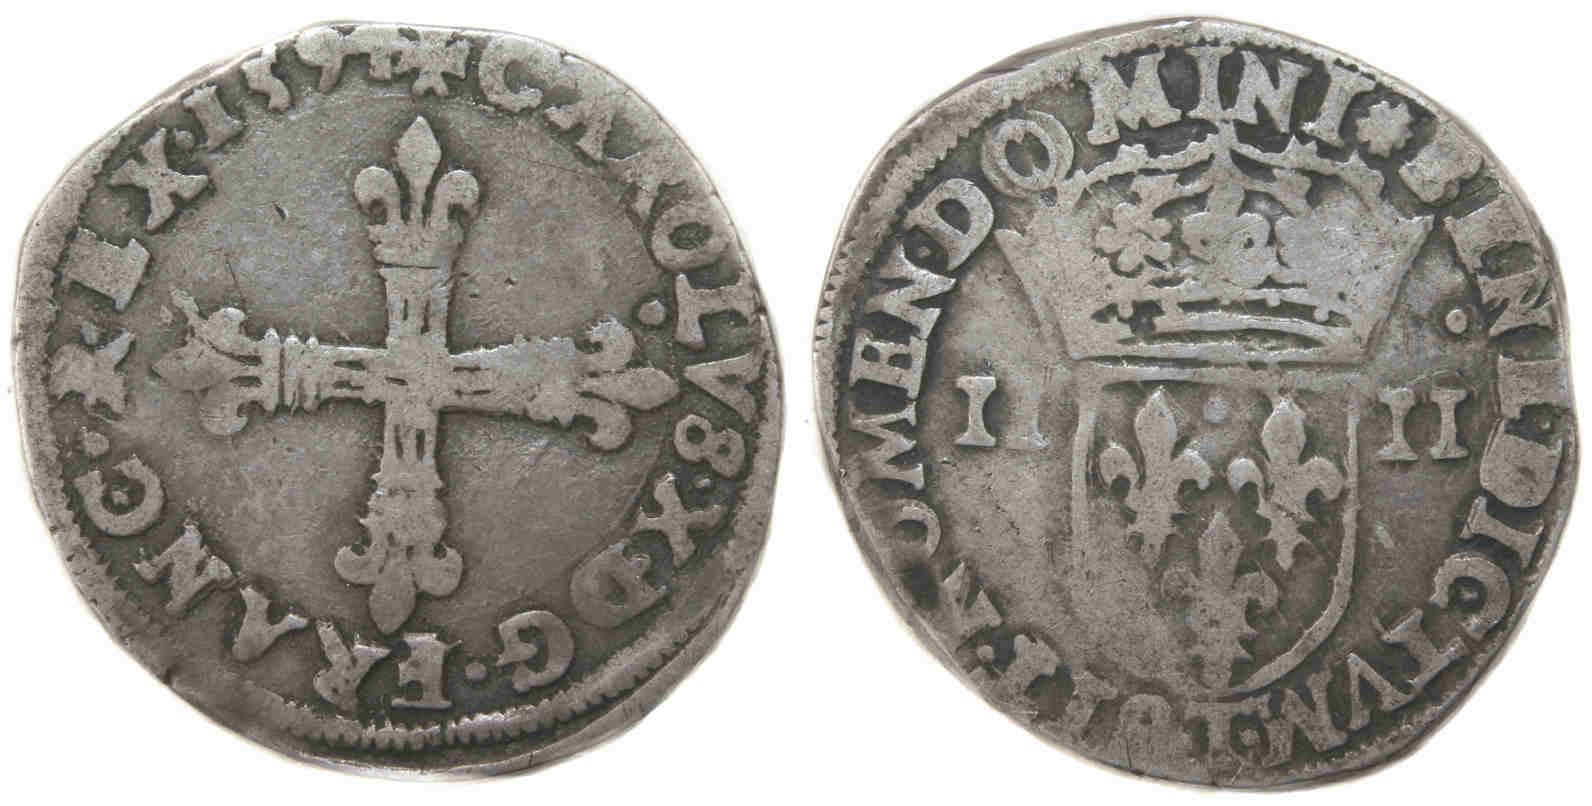 Monnaies royales francaises quart ecu 1594 nantes